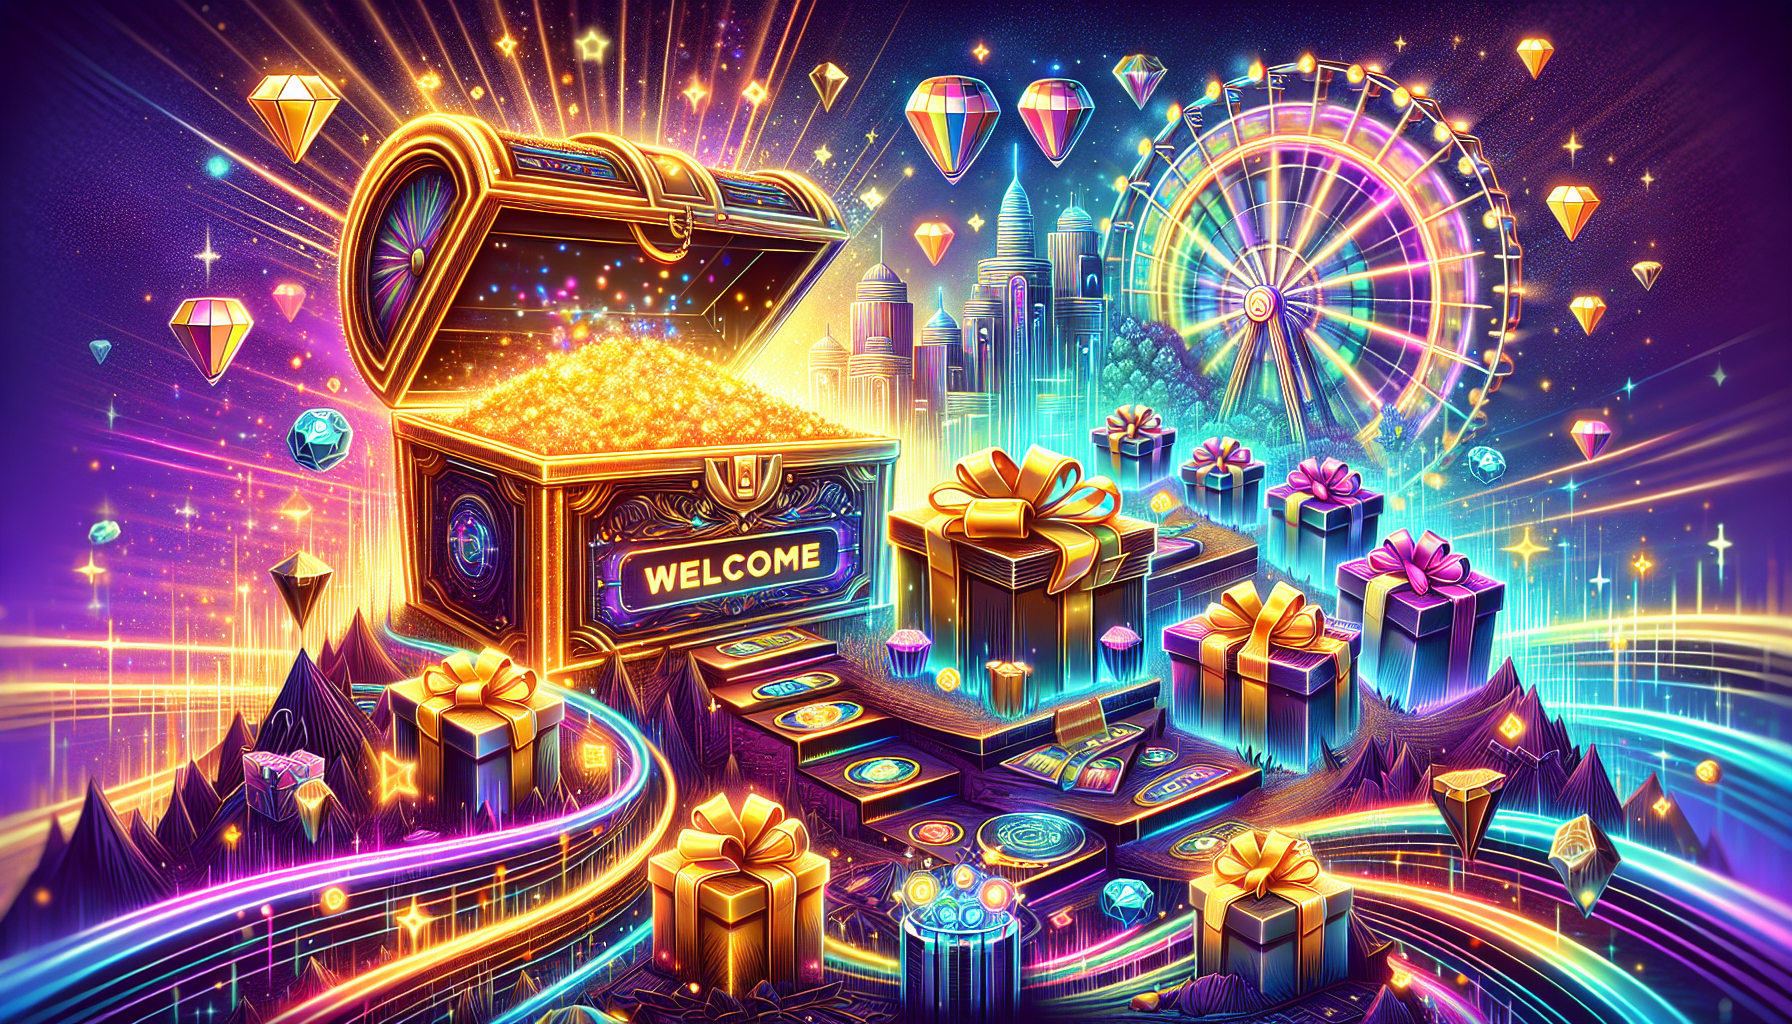 Colorful illustration of casino bonuses and rewards